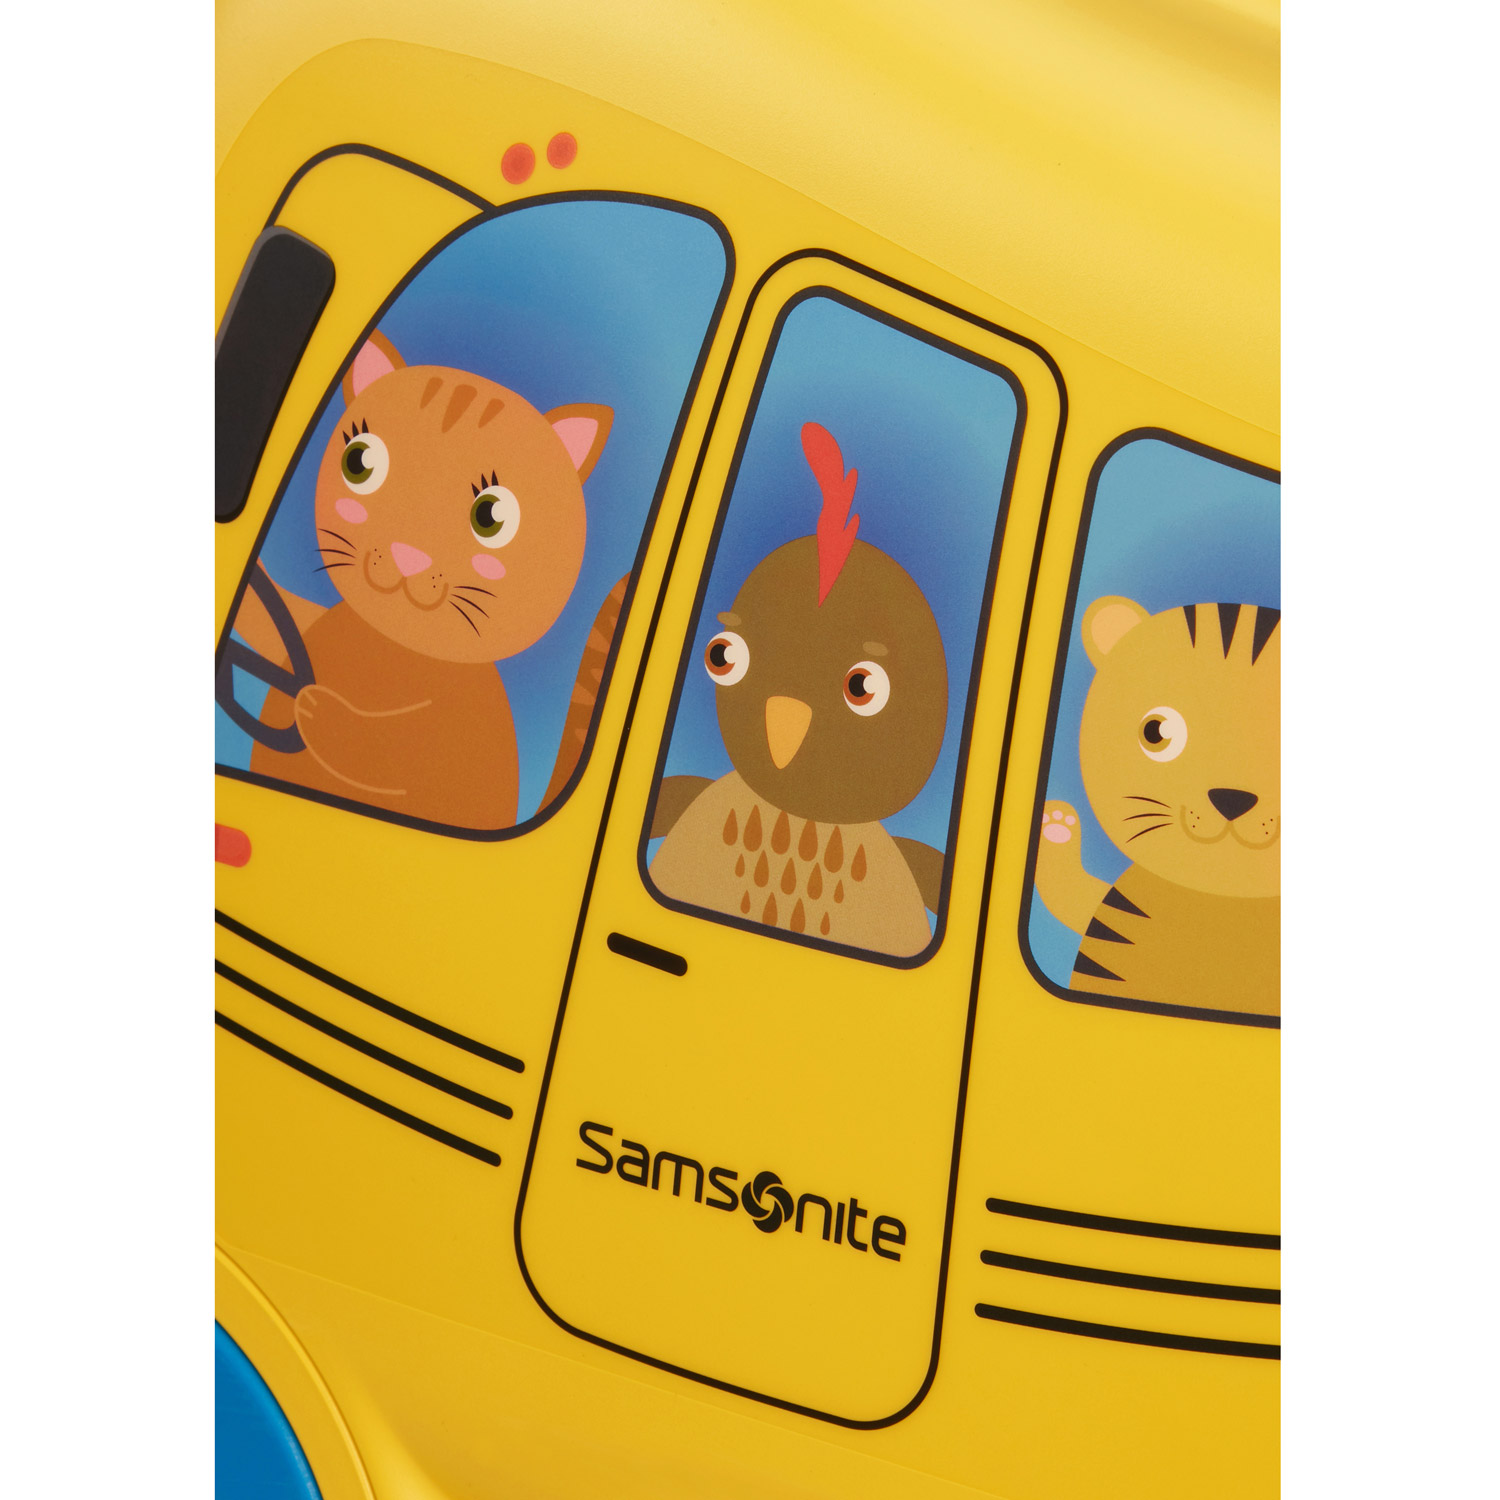 Samsonite Kindertrolley 4 Rollen Dream2Go School Bus